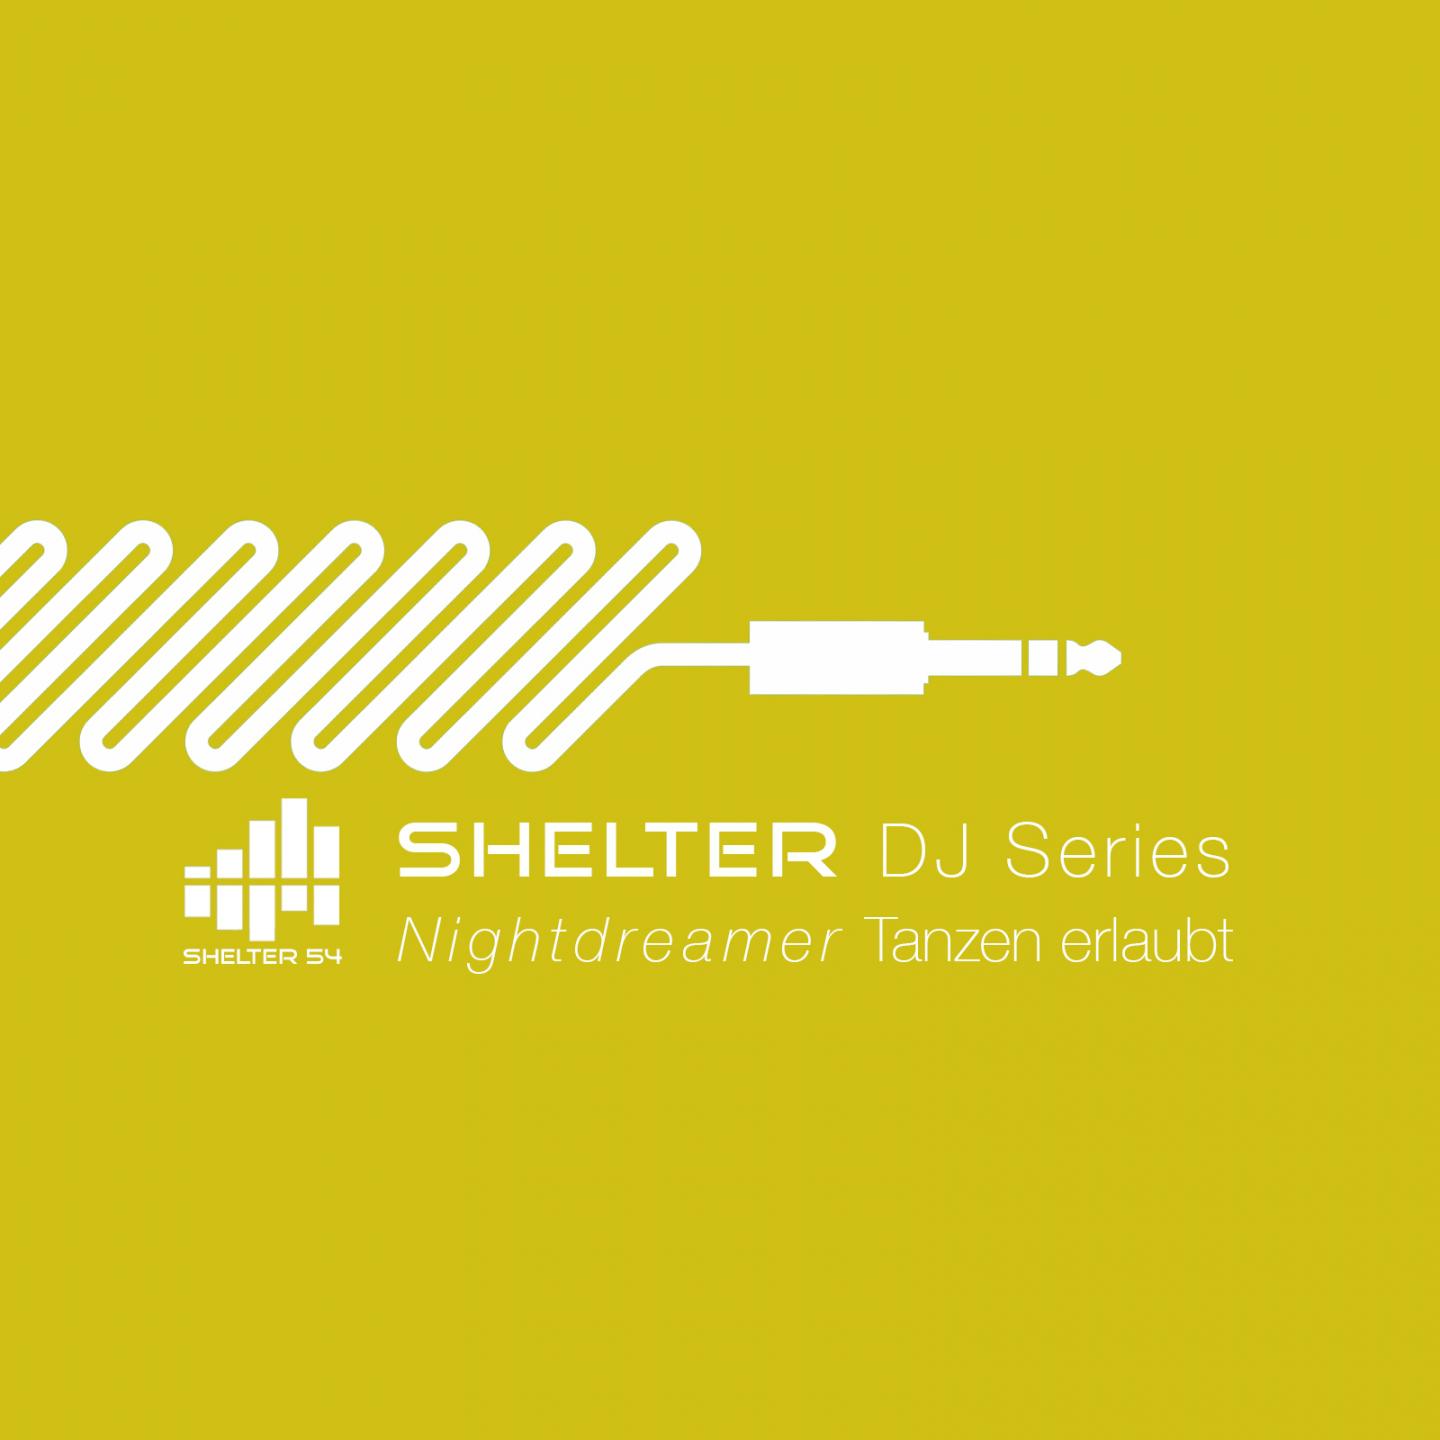 Shelter 54 DJ Series Tanzen erlaubt